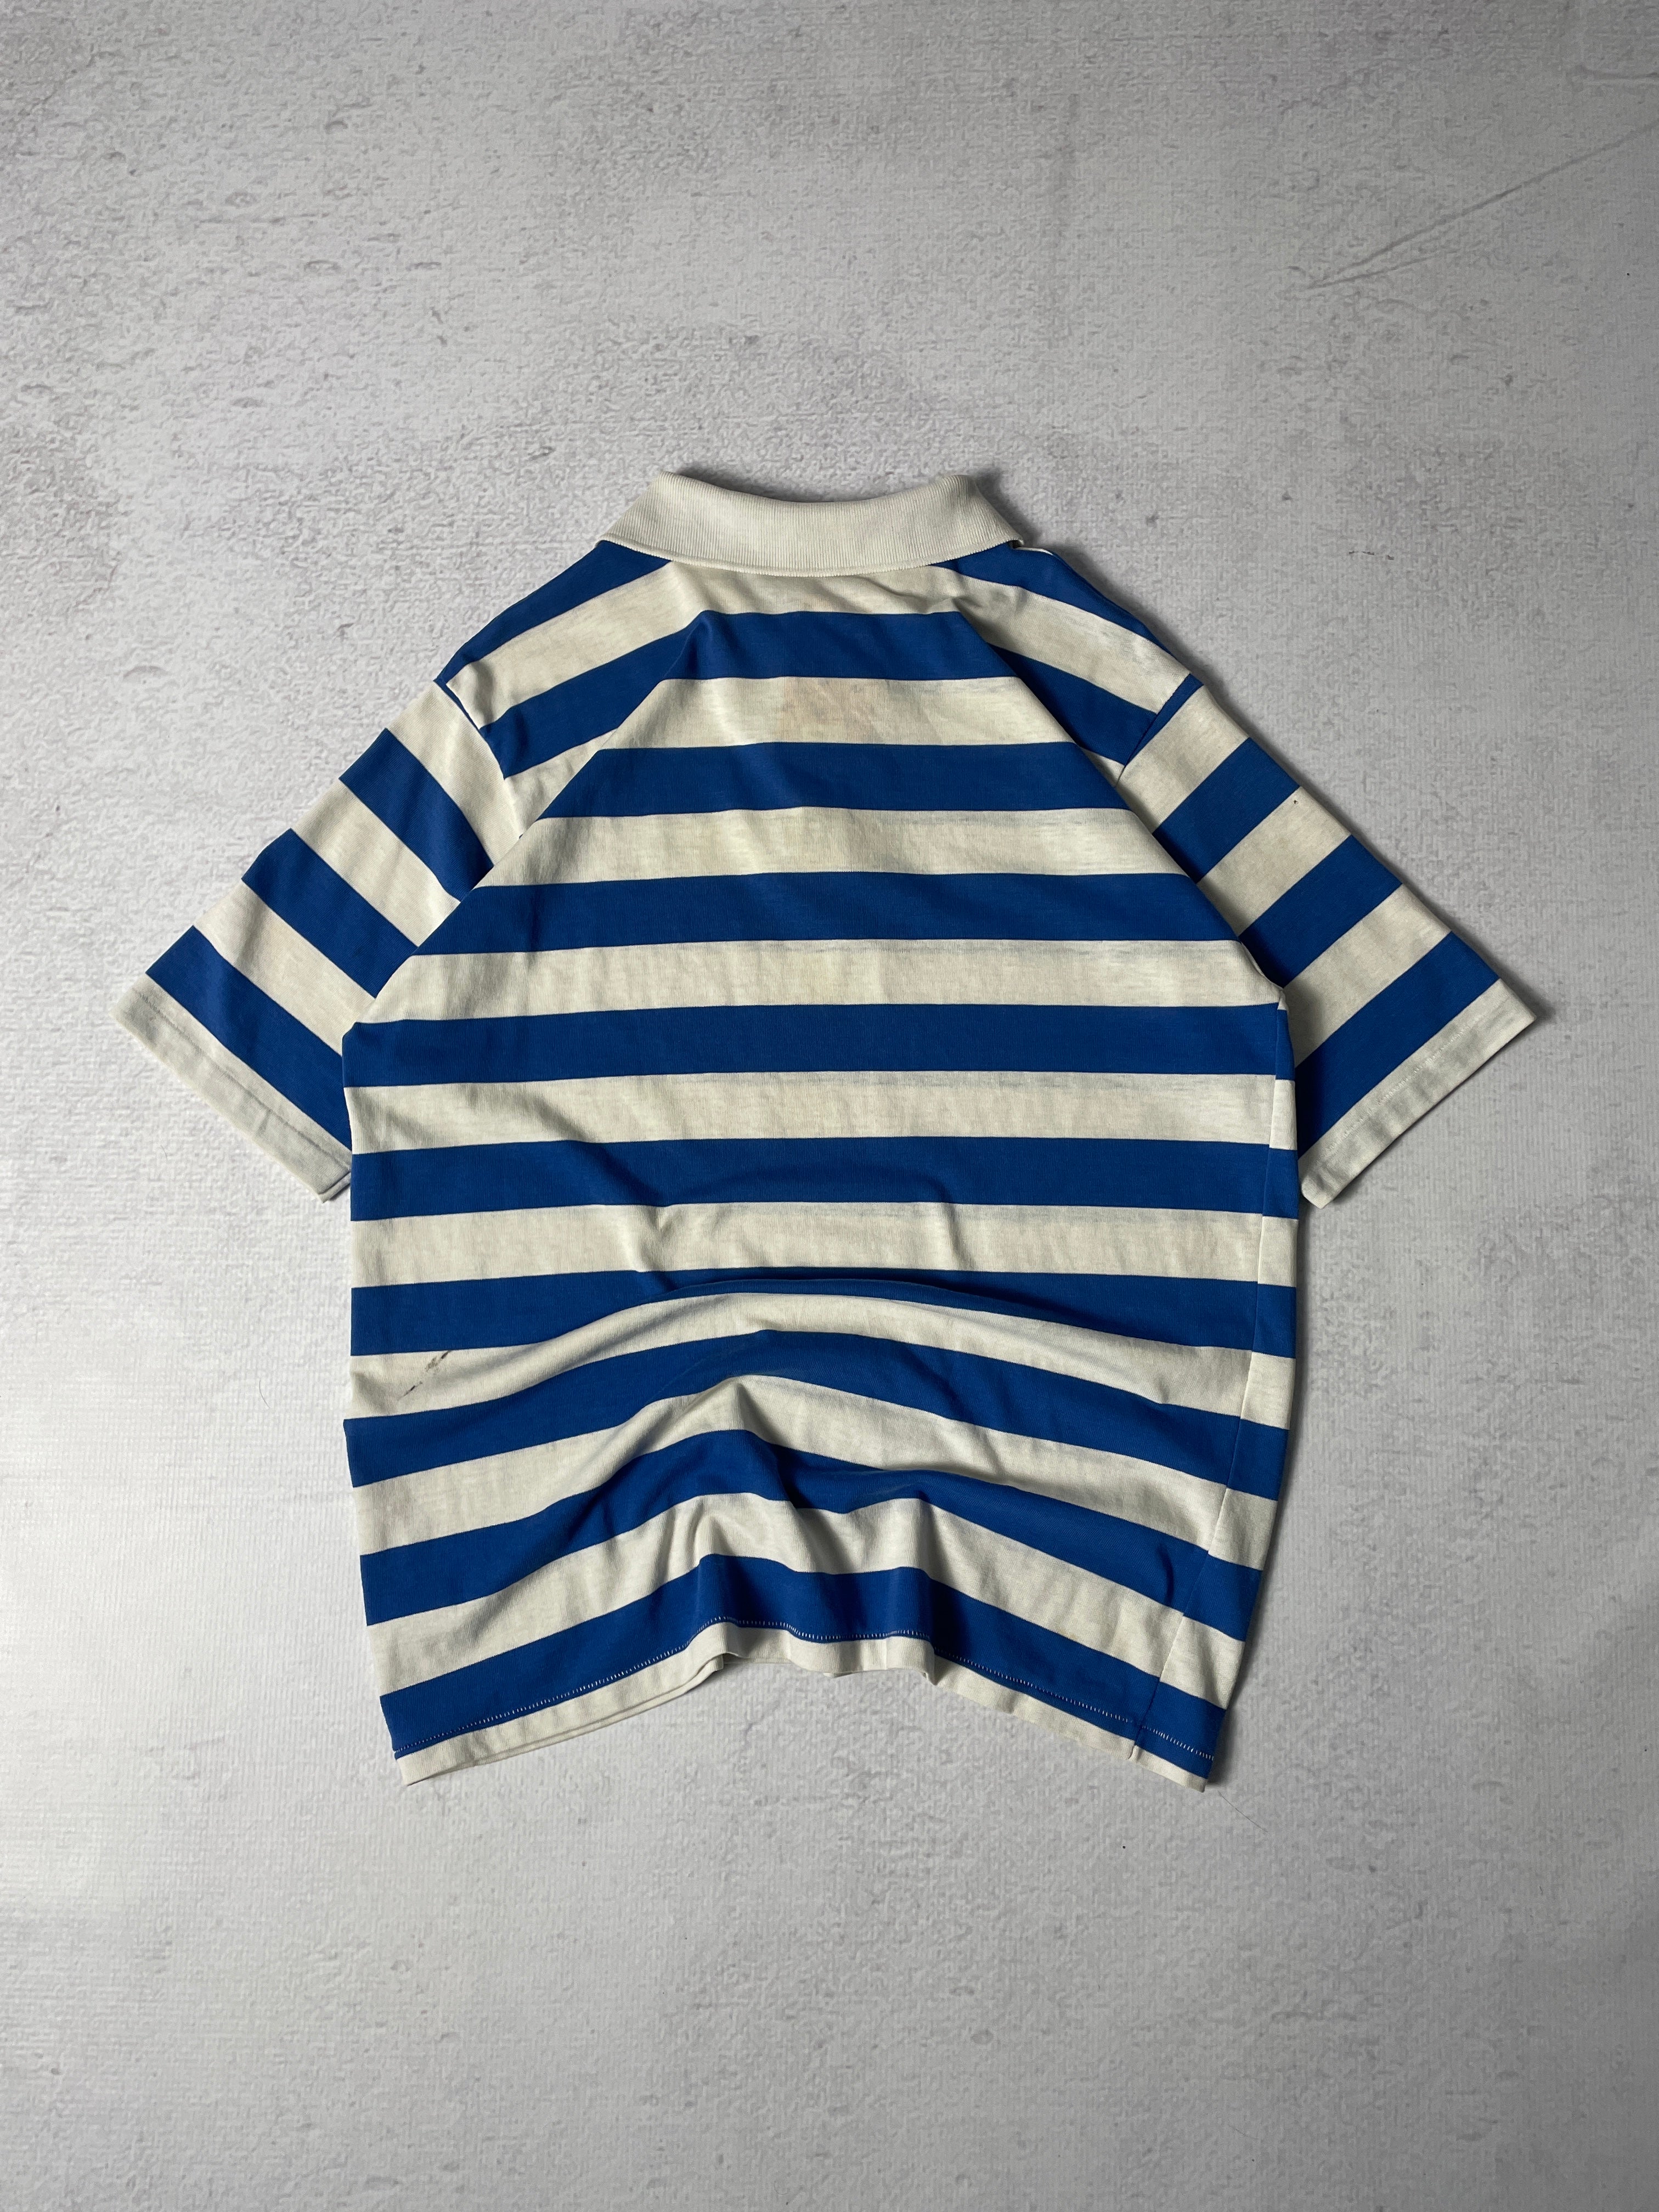 Vintage Striped Polo Shirt - Men's Medium